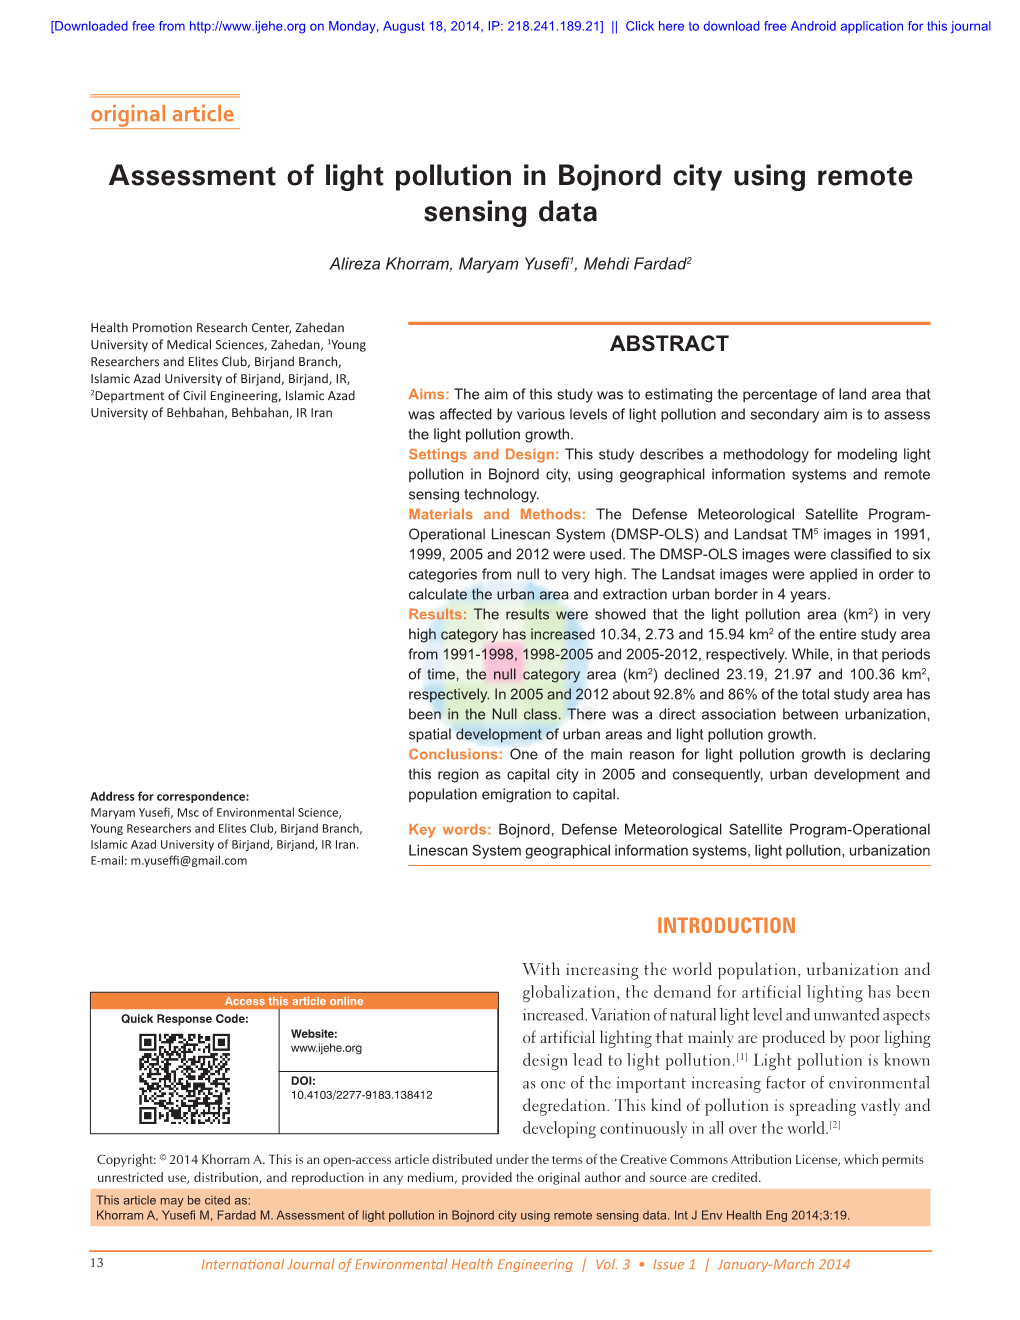 Assessment of Light Pollution in Bojnord City Using Remote Sensing Data